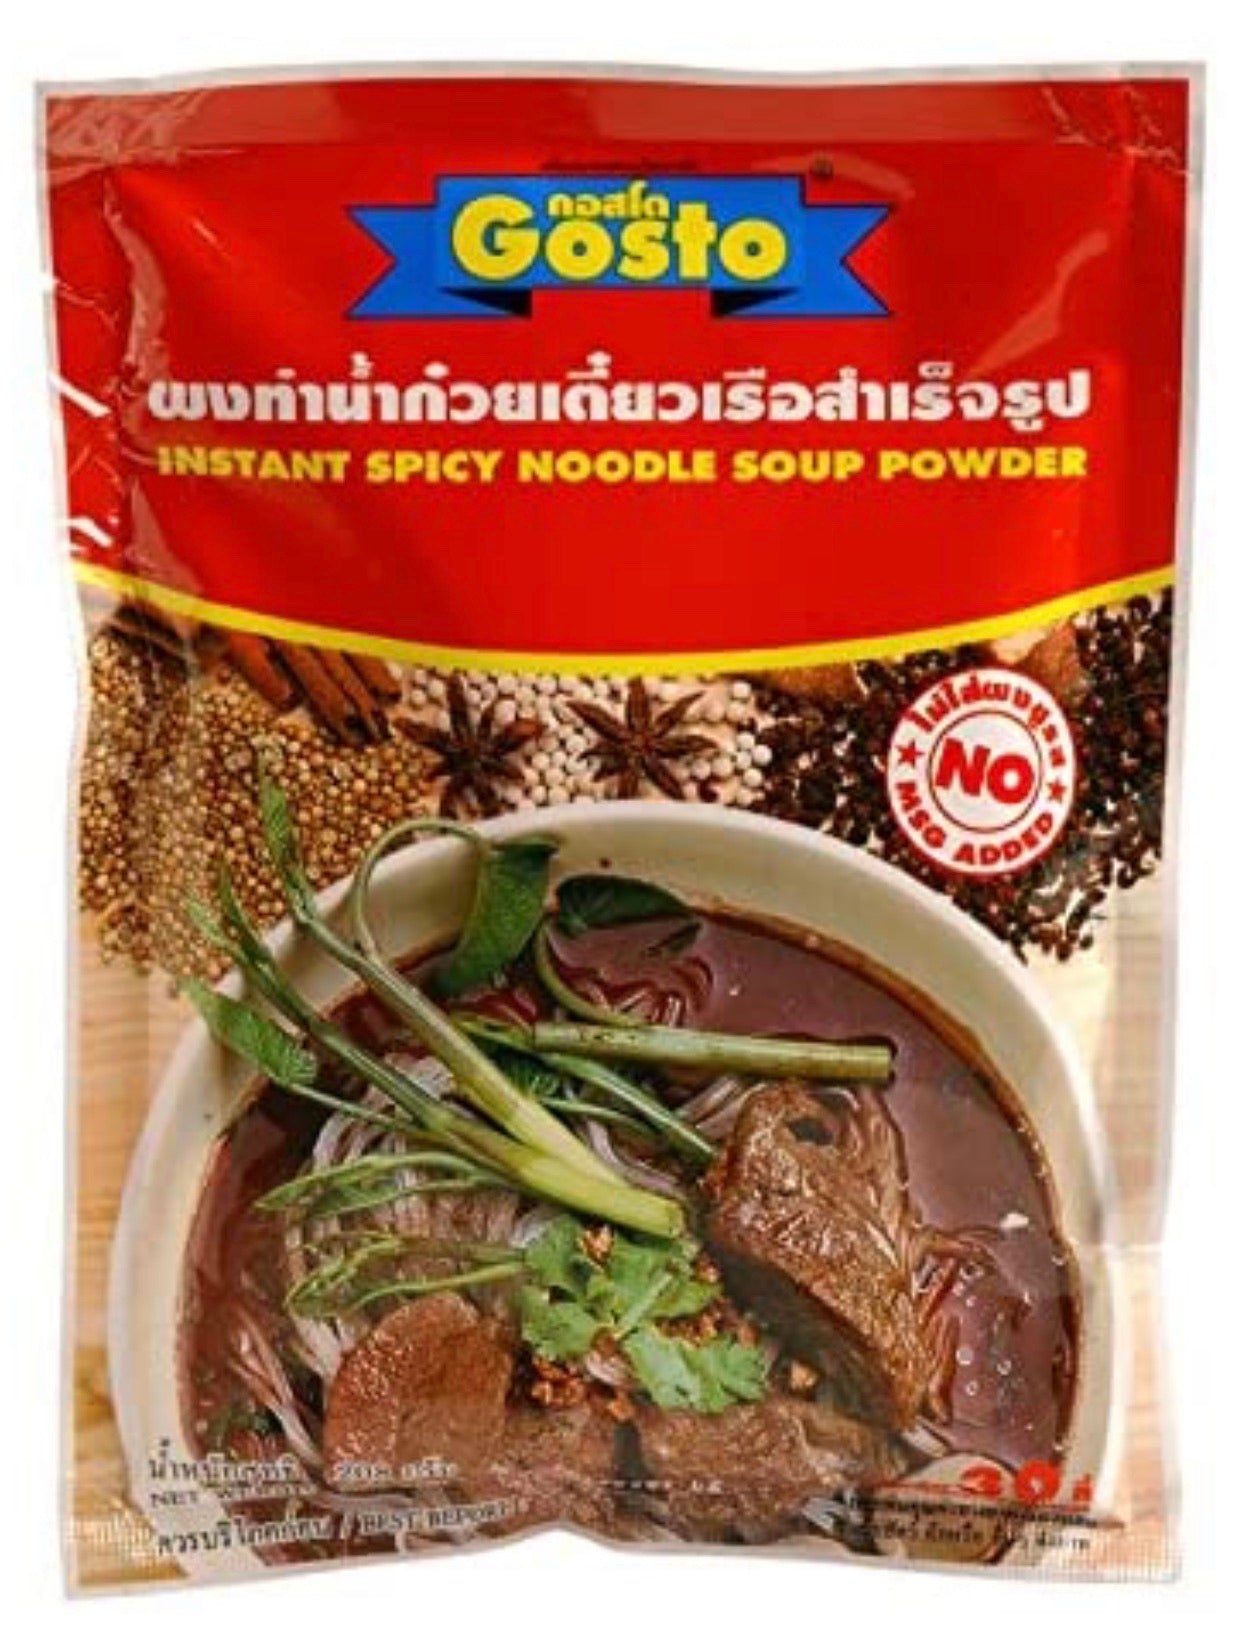 Spicy Noodles Soup Powder (Gosto Brand) - ผงก๋วยเตี๋ยวเรือคอนโต